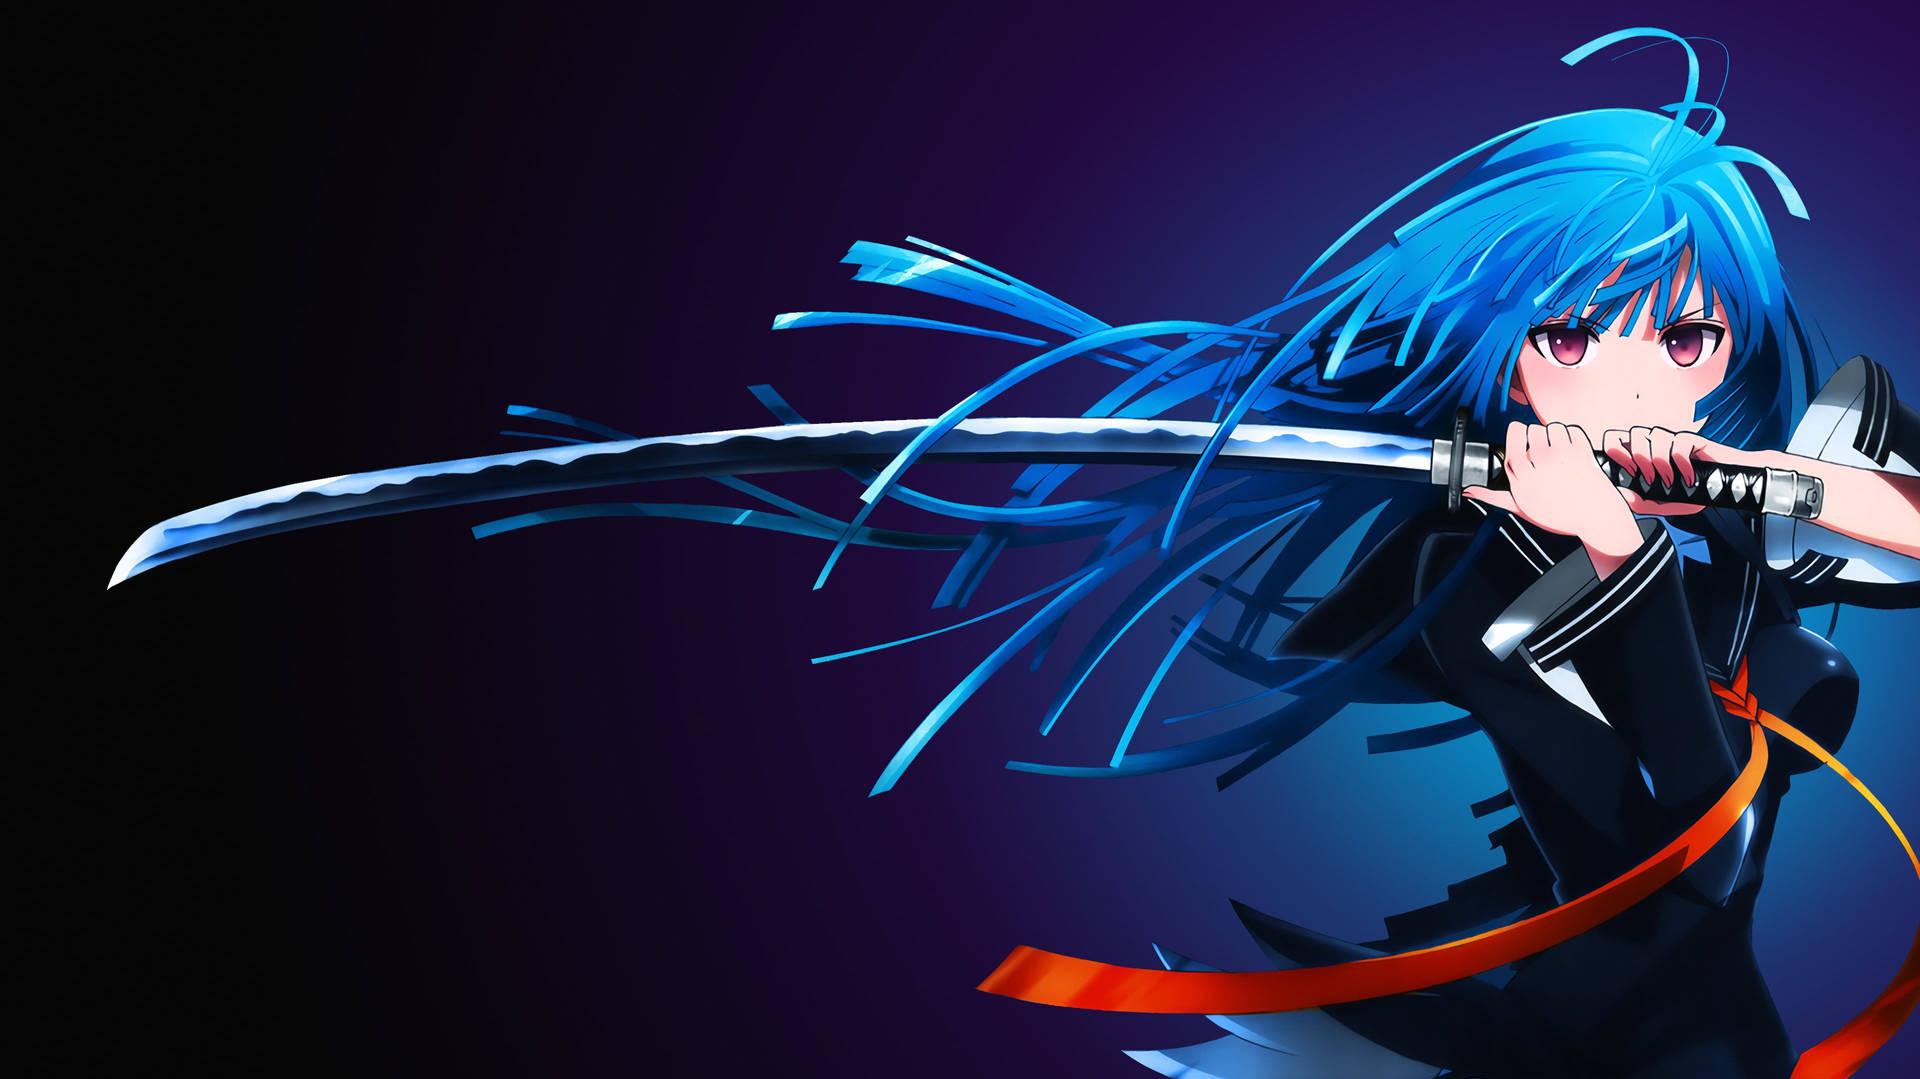 Download Anime Gaming Blue Blade Girl Wallpaper